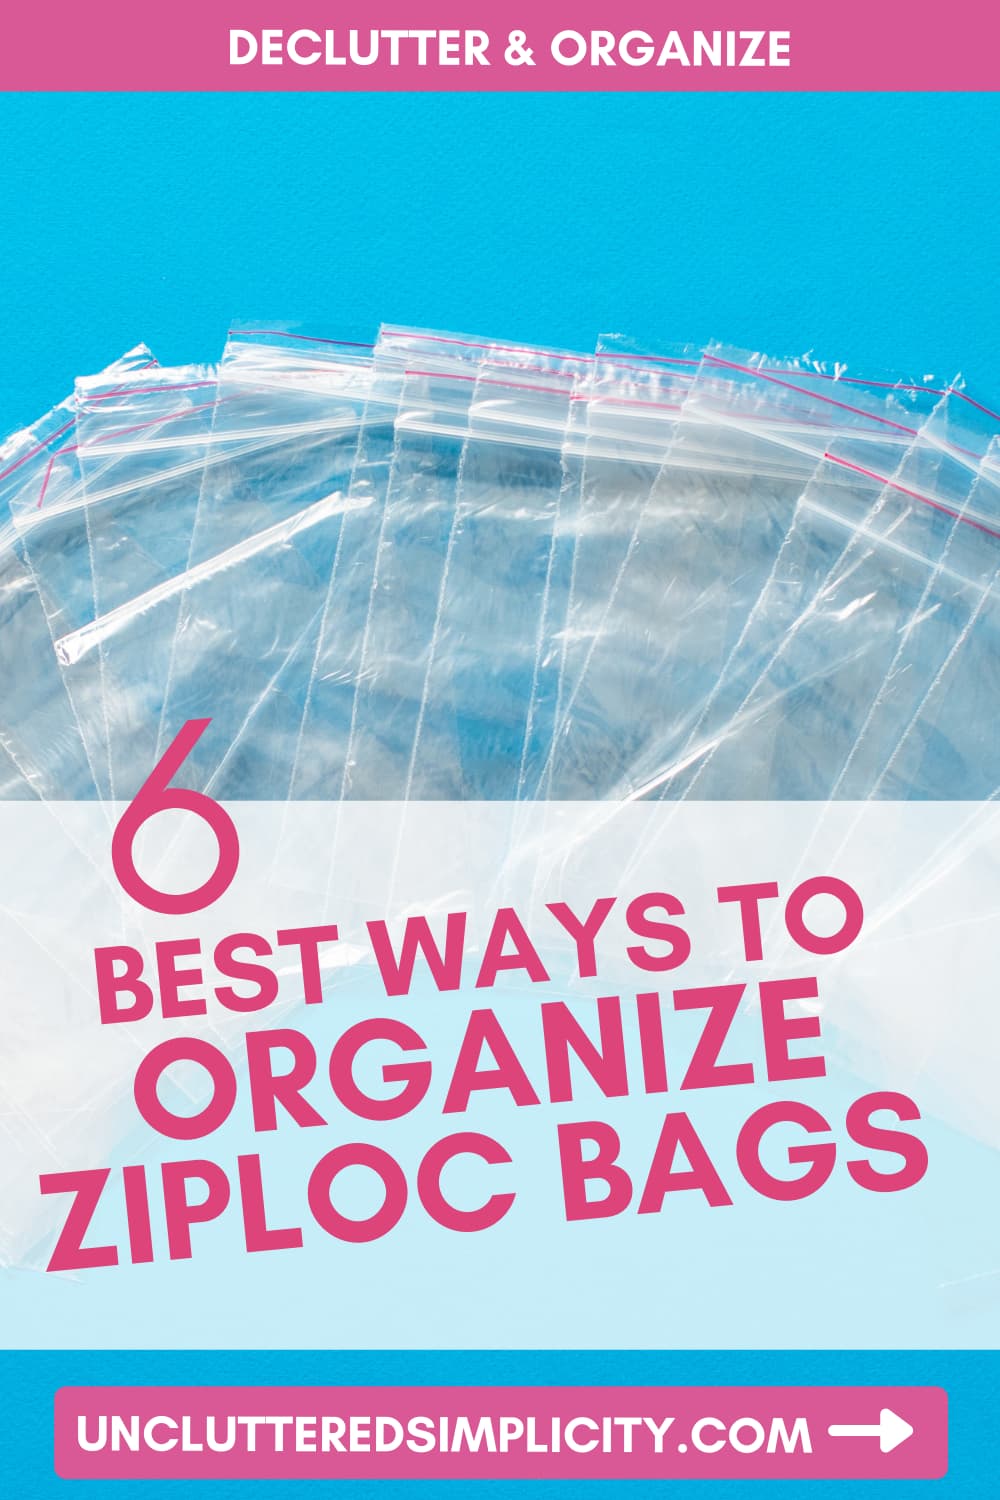 Pin Organize Ziploc Bags